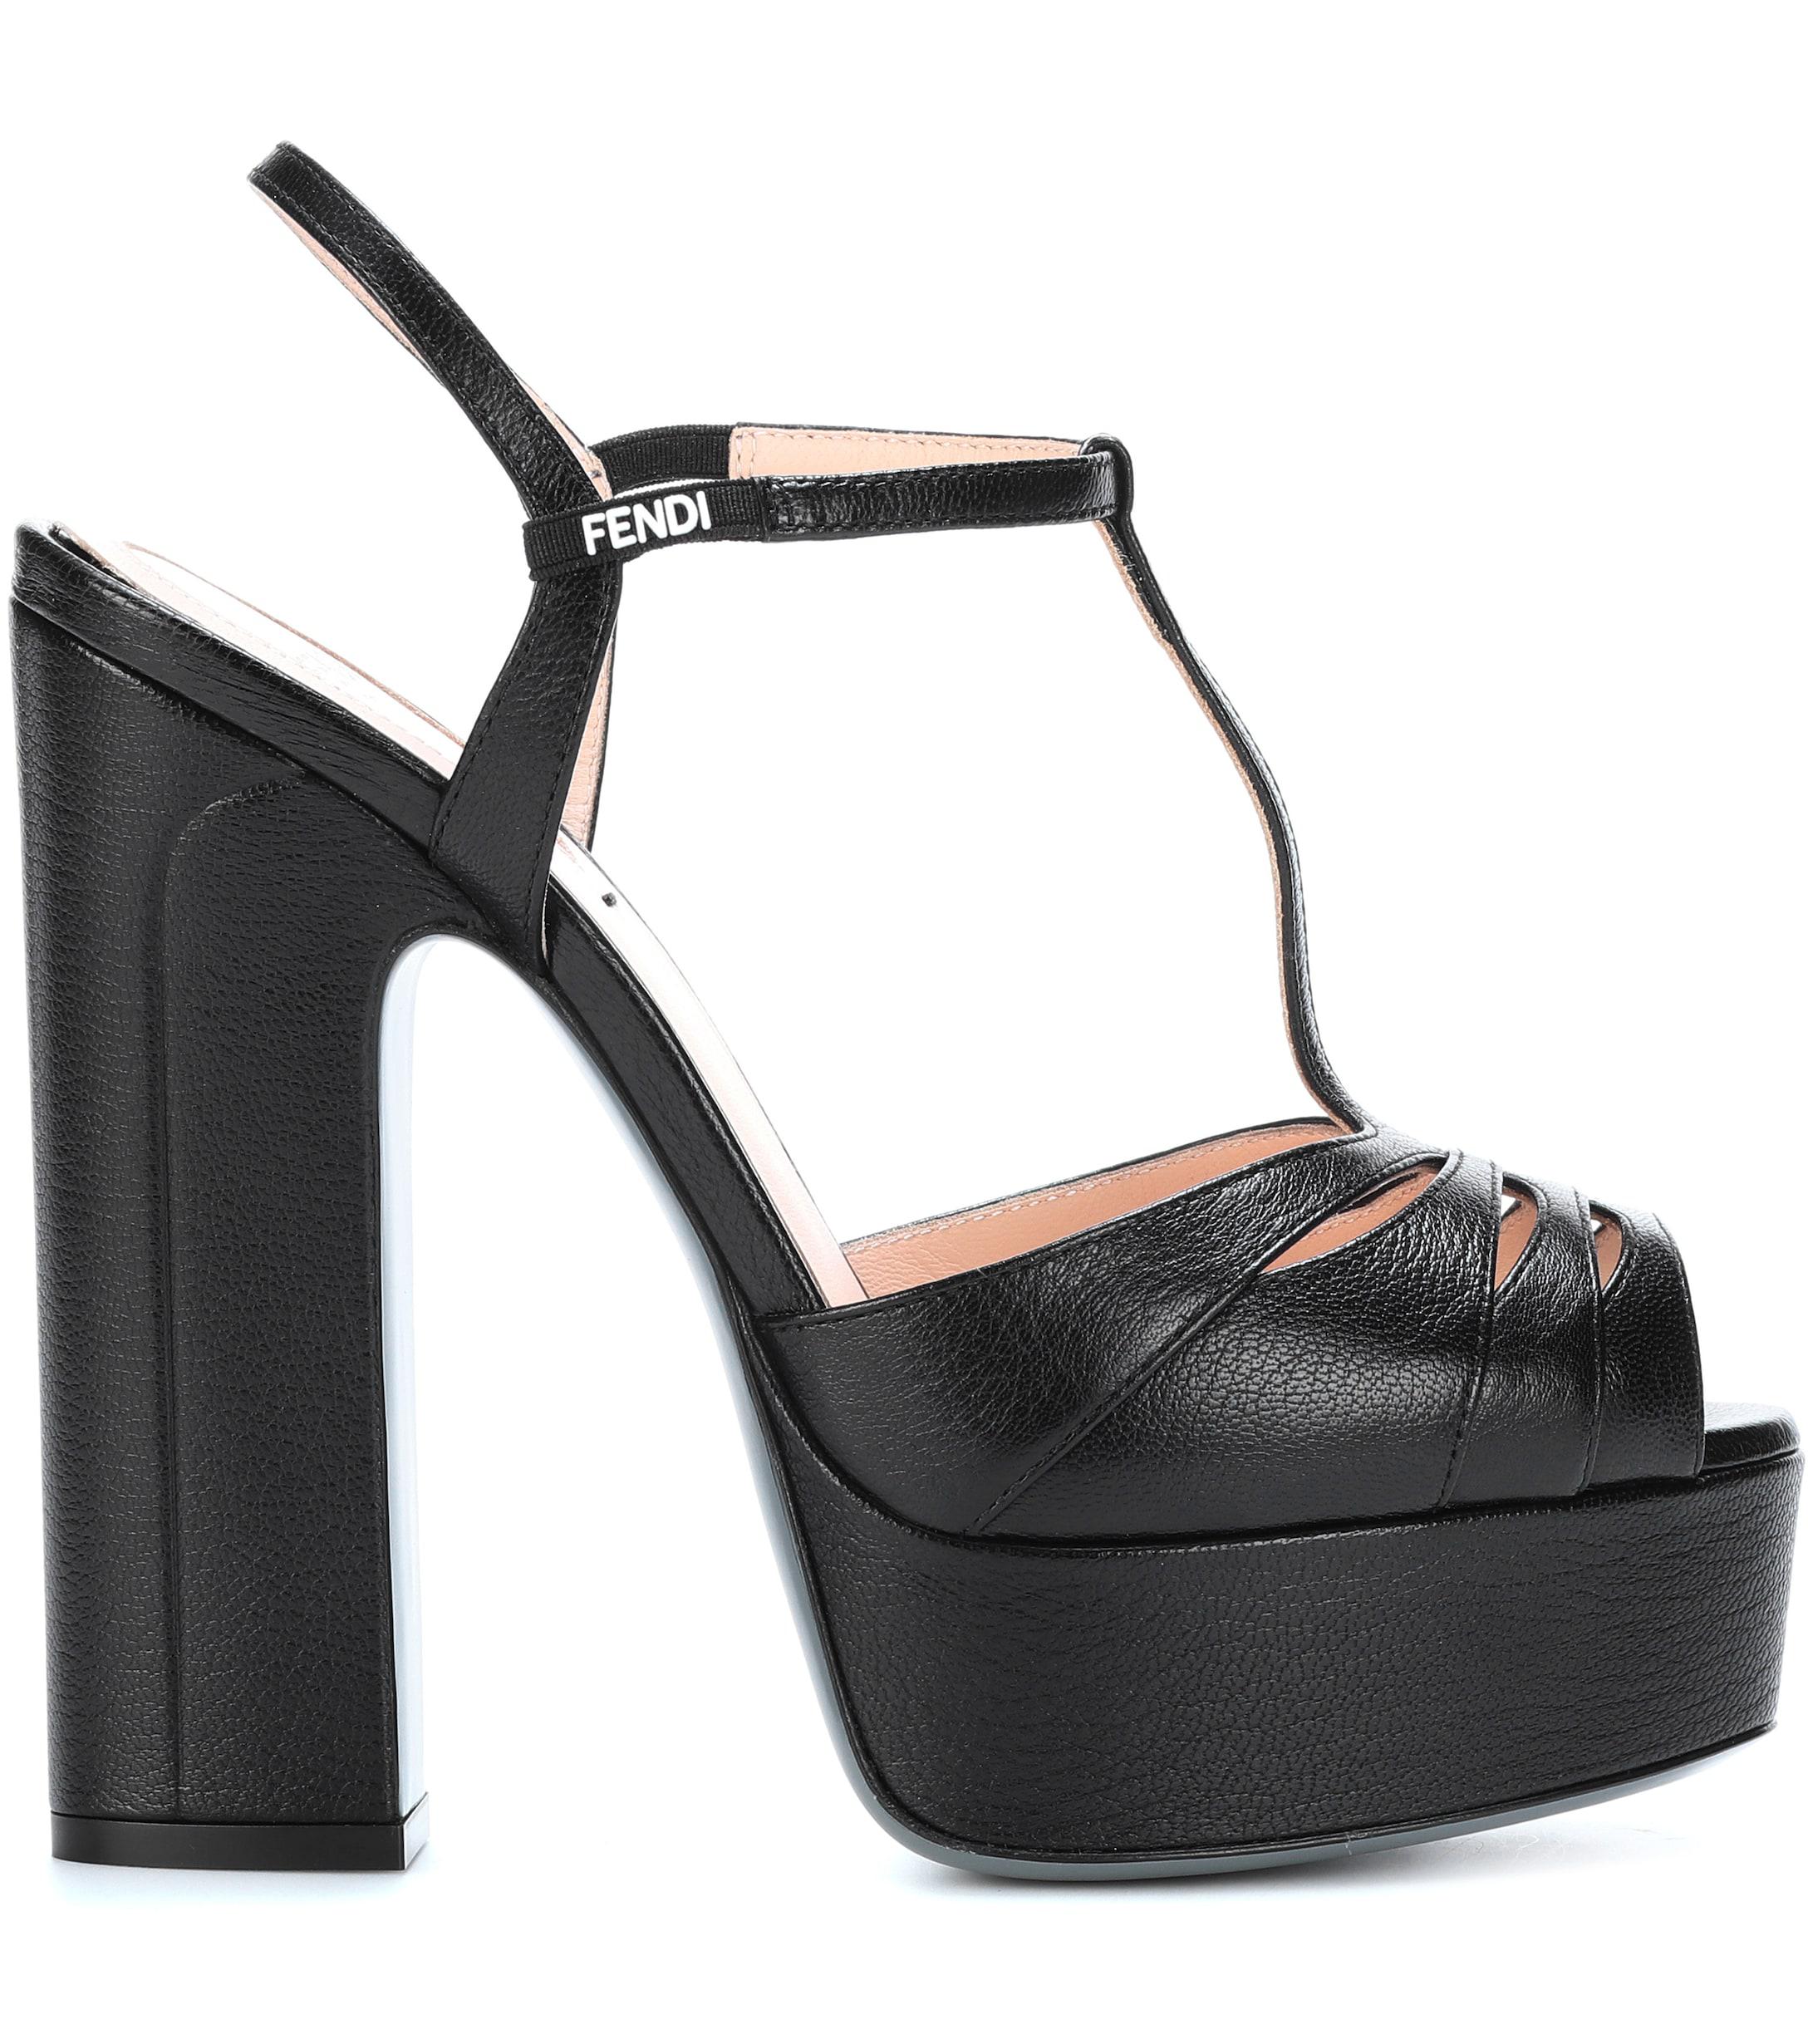 Fendi Platform Leather Sandals in Black - Lyst